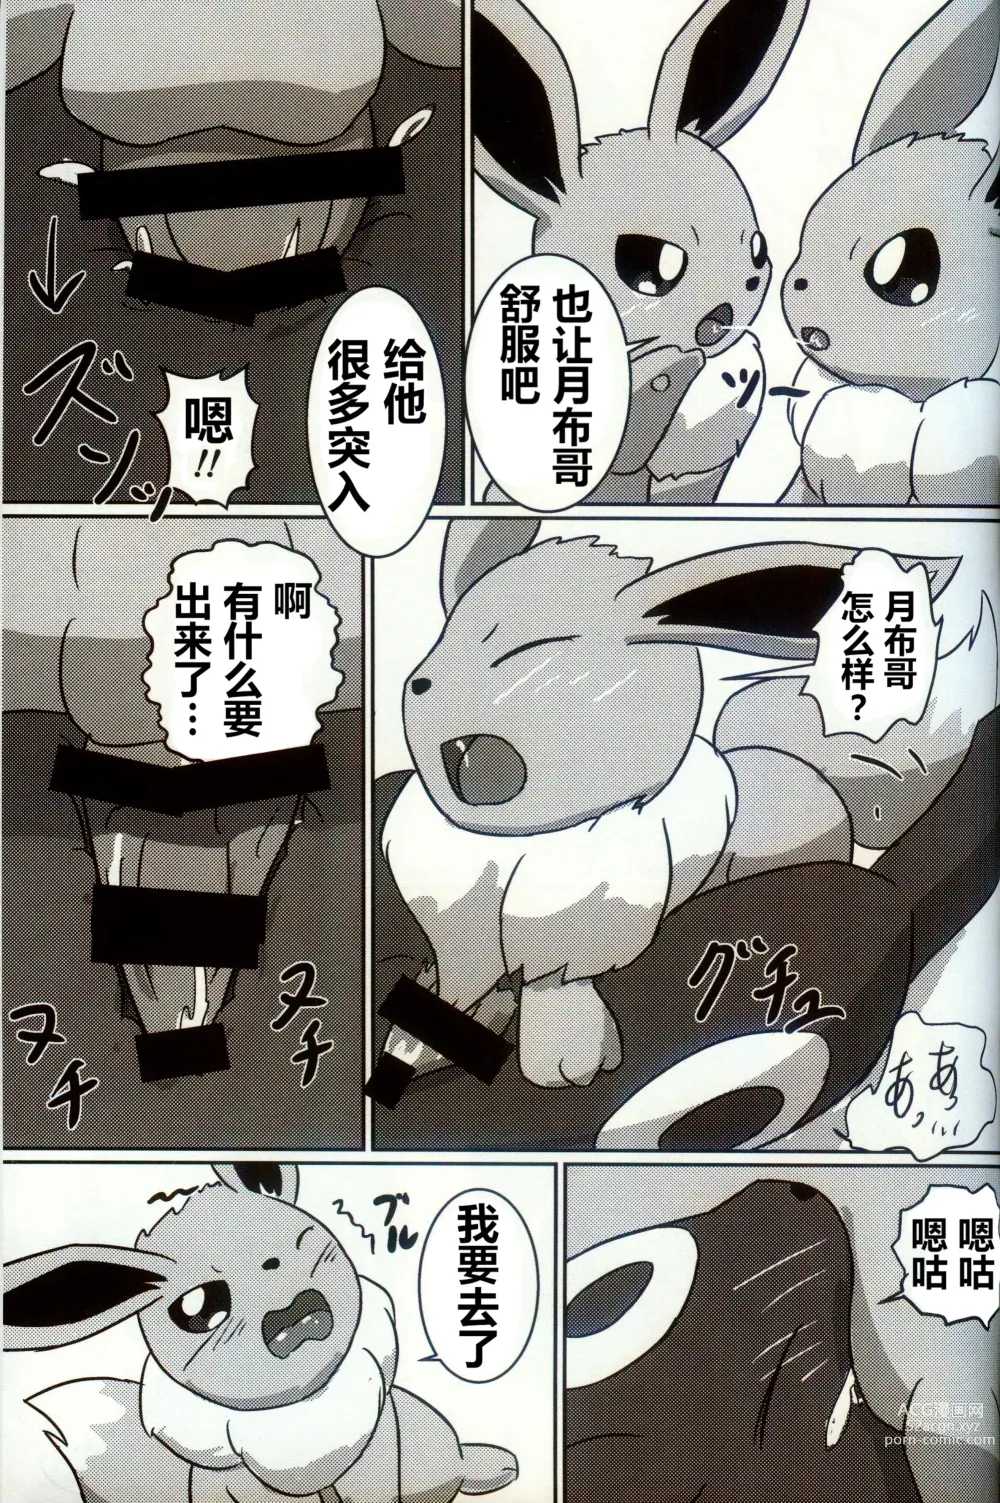 Page 19 of doujinshi 被拜托照顾附近的双胞胎发生了不得了的事...